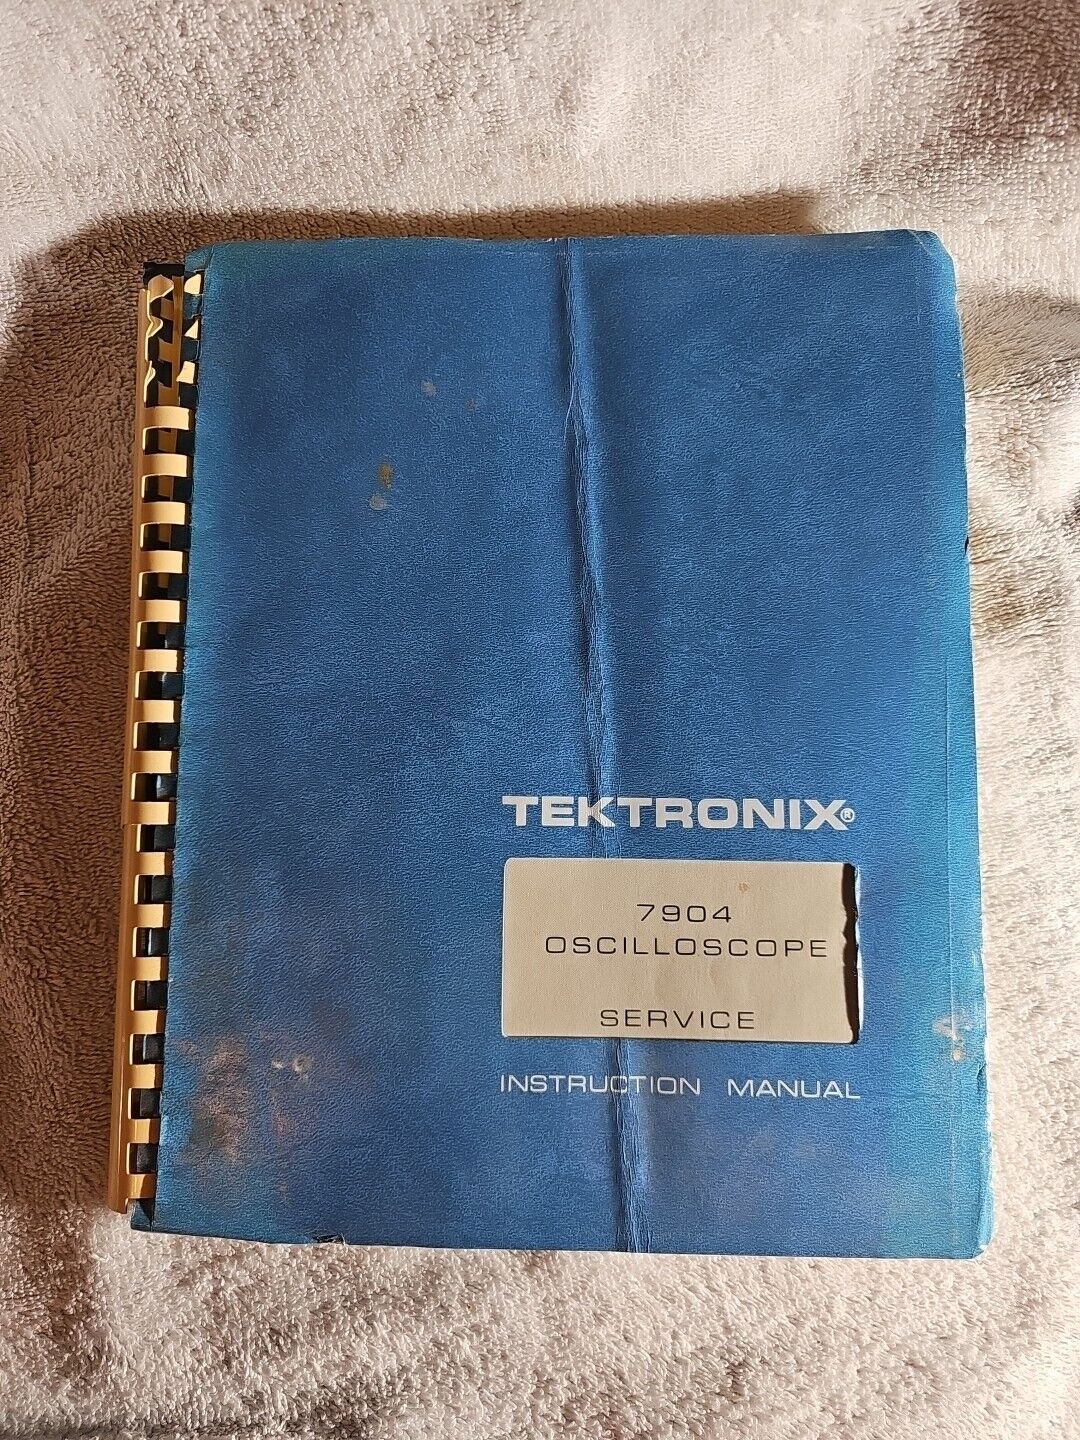 Vintage Tektronix 7904 OSCILLOSCOPE Service Instruction Manual 070-1195-02